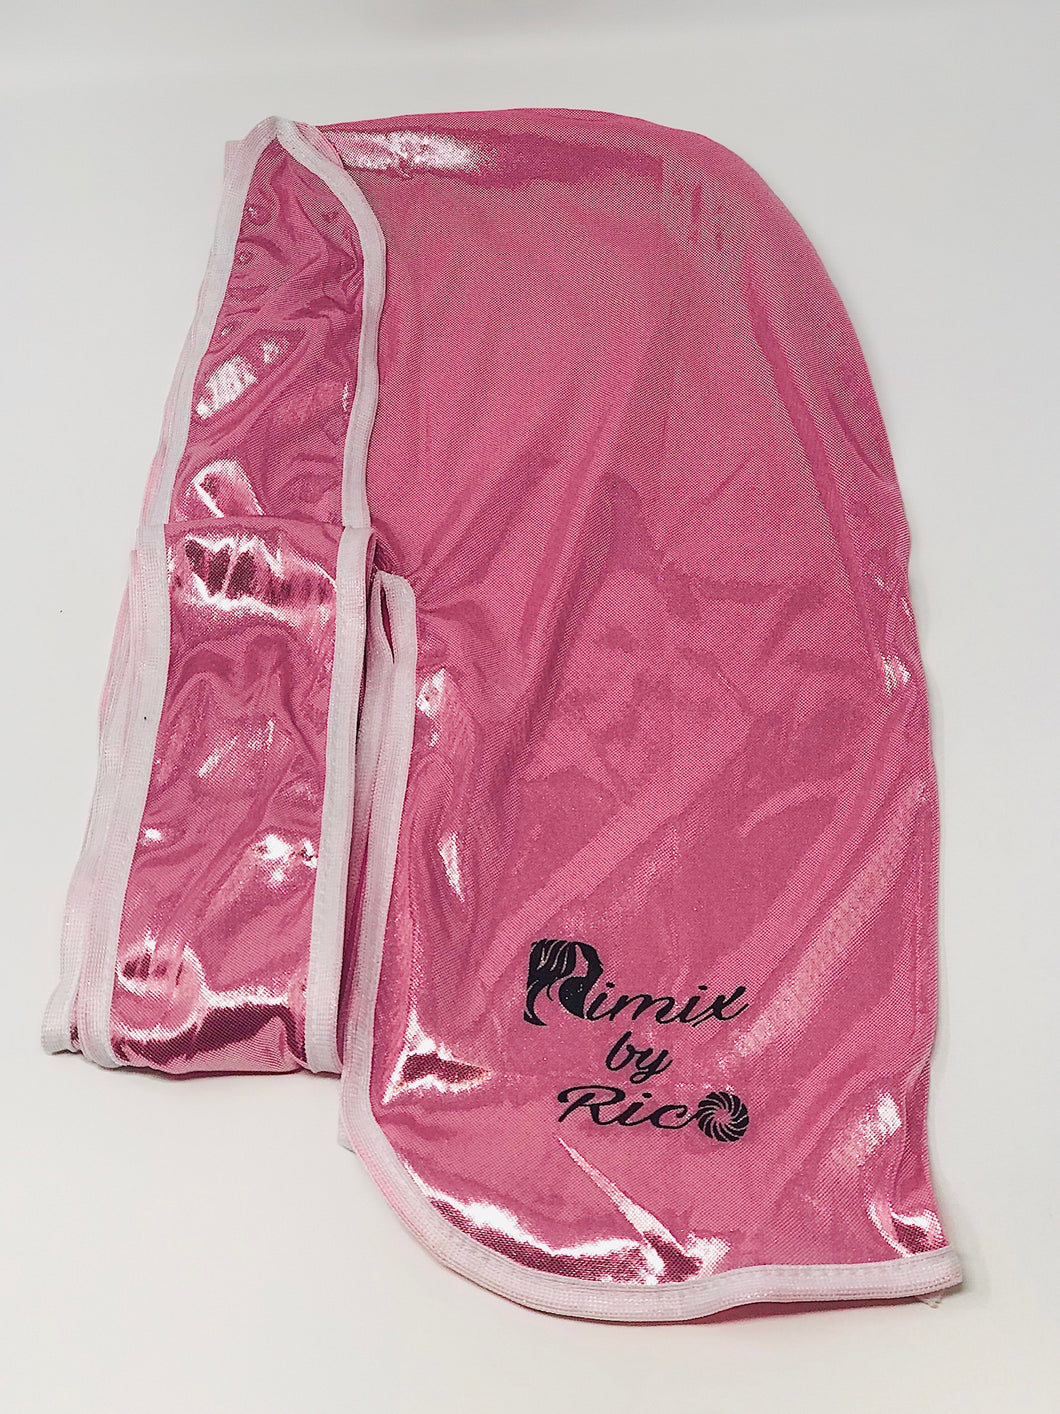 Rimix 8K Ultra Tuxedo Durag**Limited Edition - Pink/White Trim